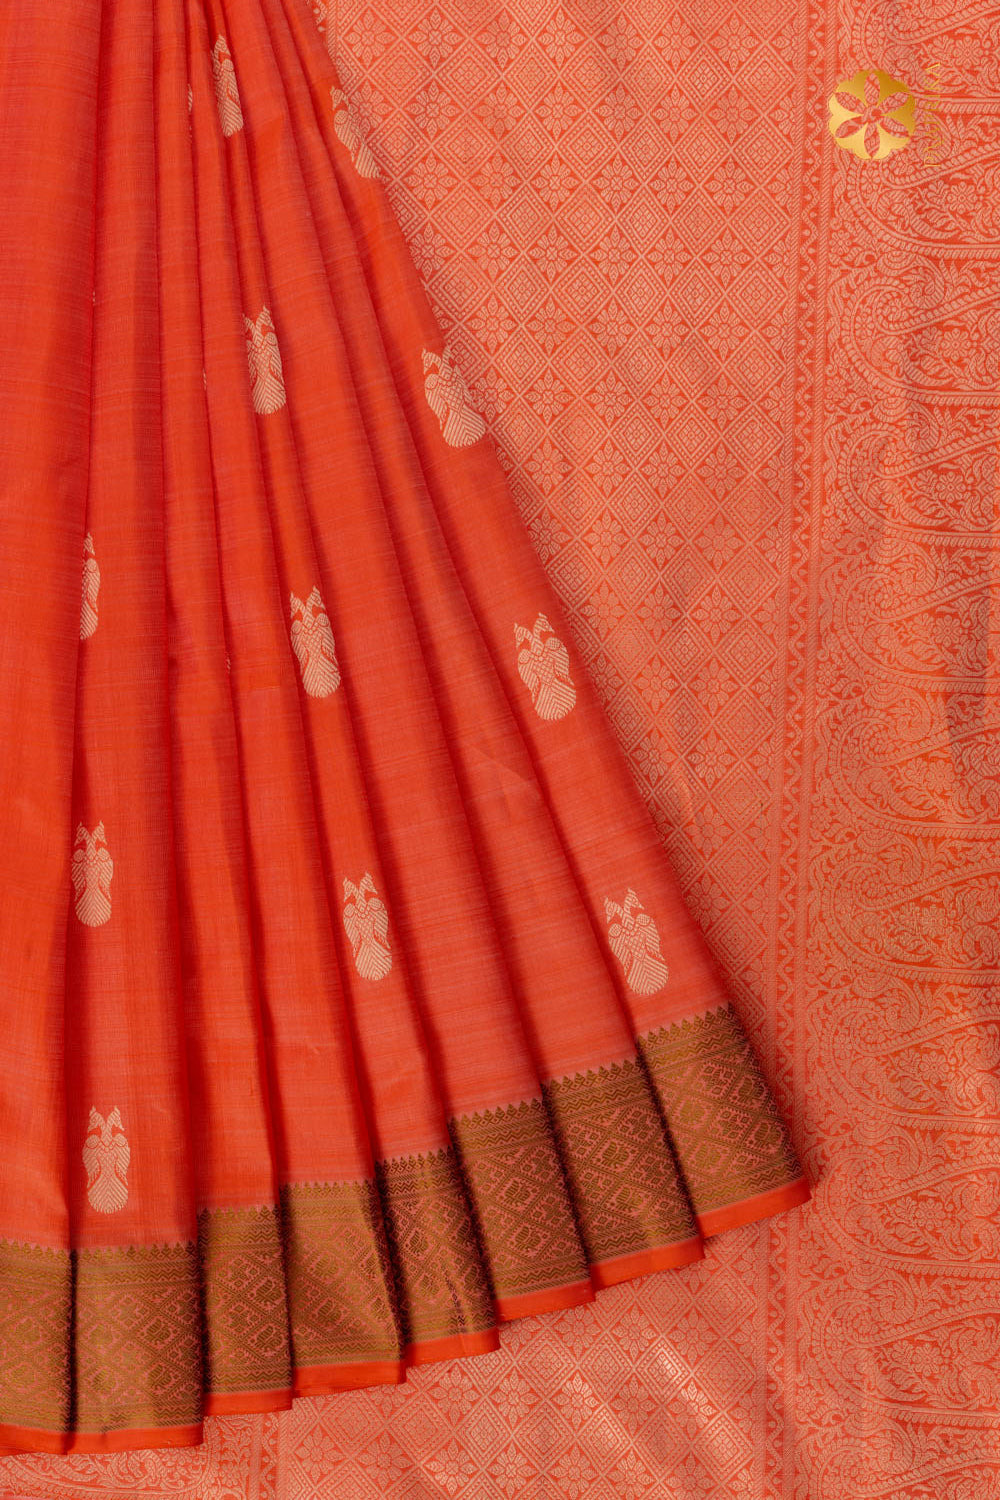 Mythical Ganda Berunda bird motif on a traditional Indian silk saree.